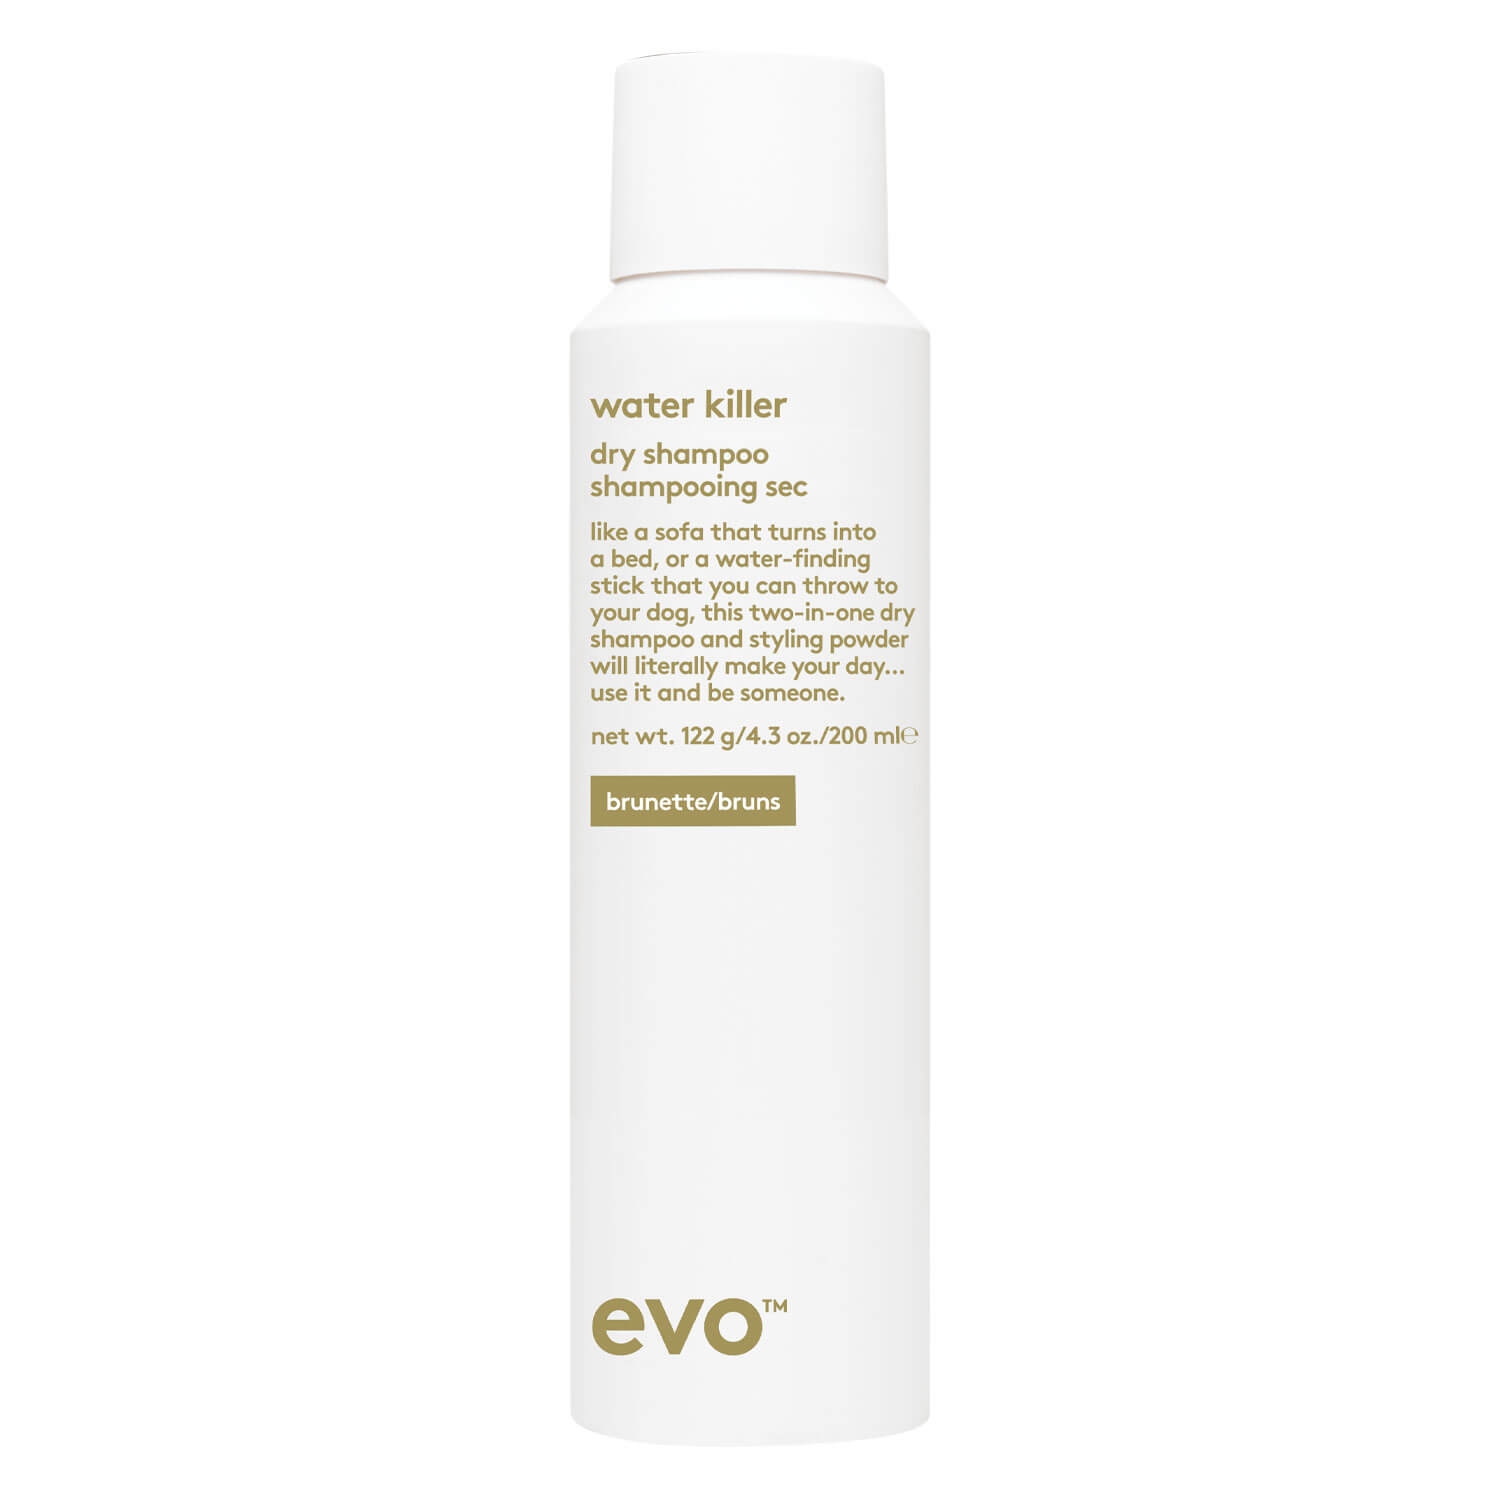 Image du produit de evo style - water killer dry shampoo brunette